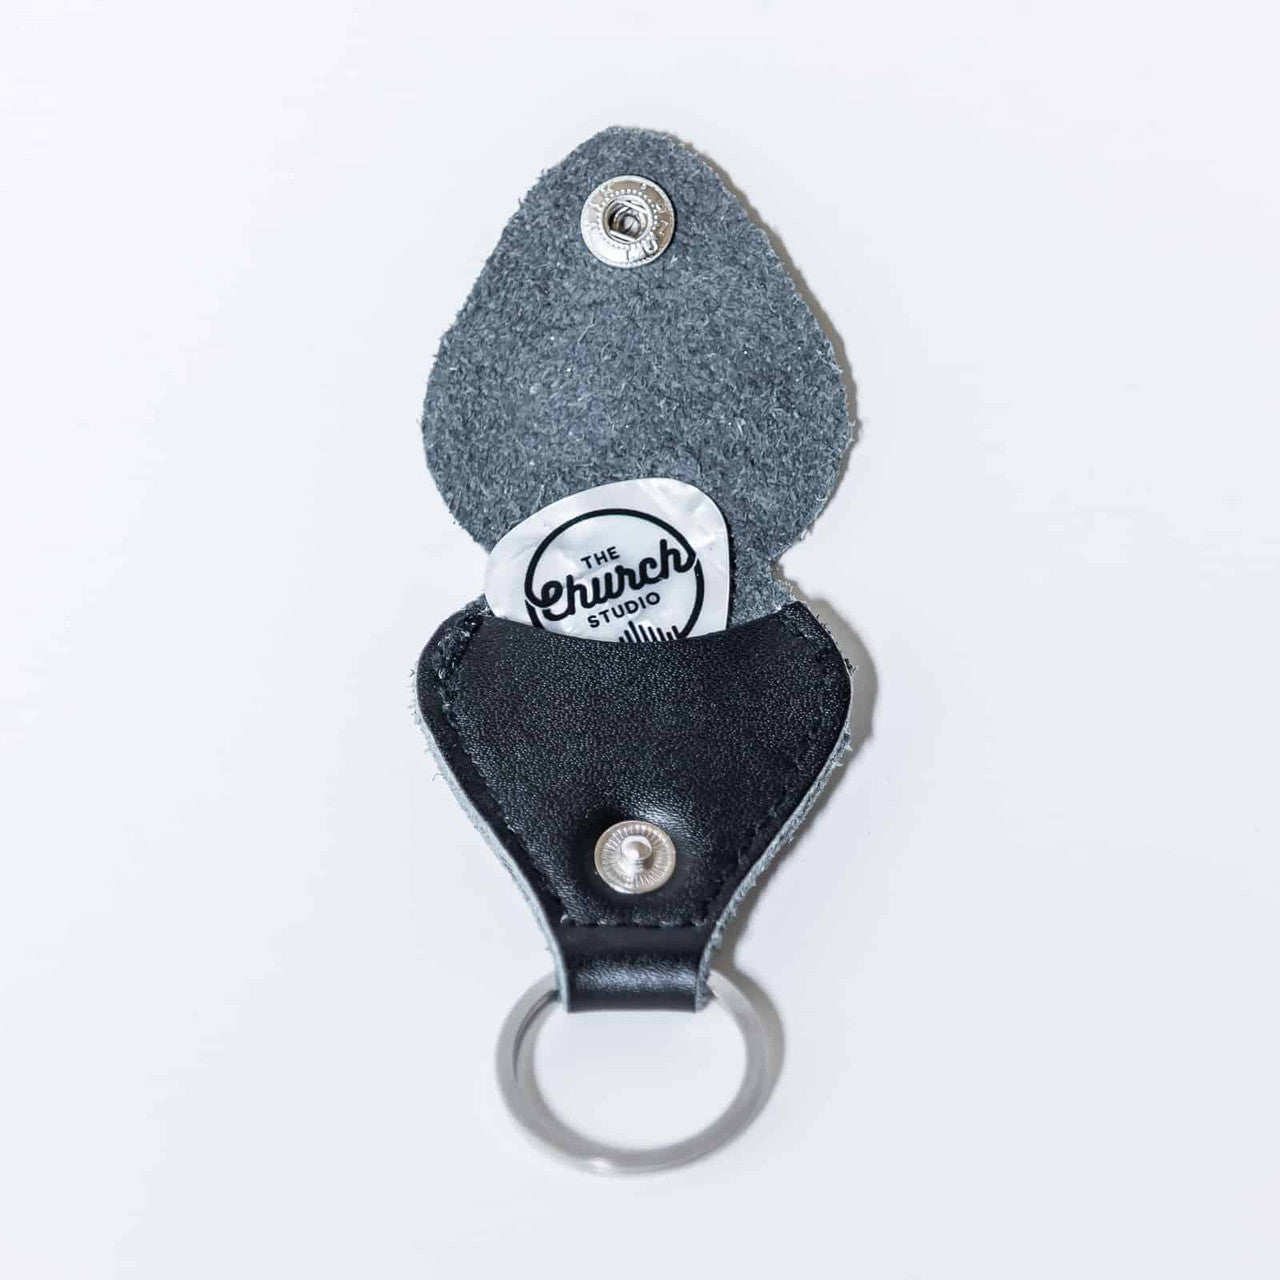 Genuine Leather Black Pick Holder/Keychain